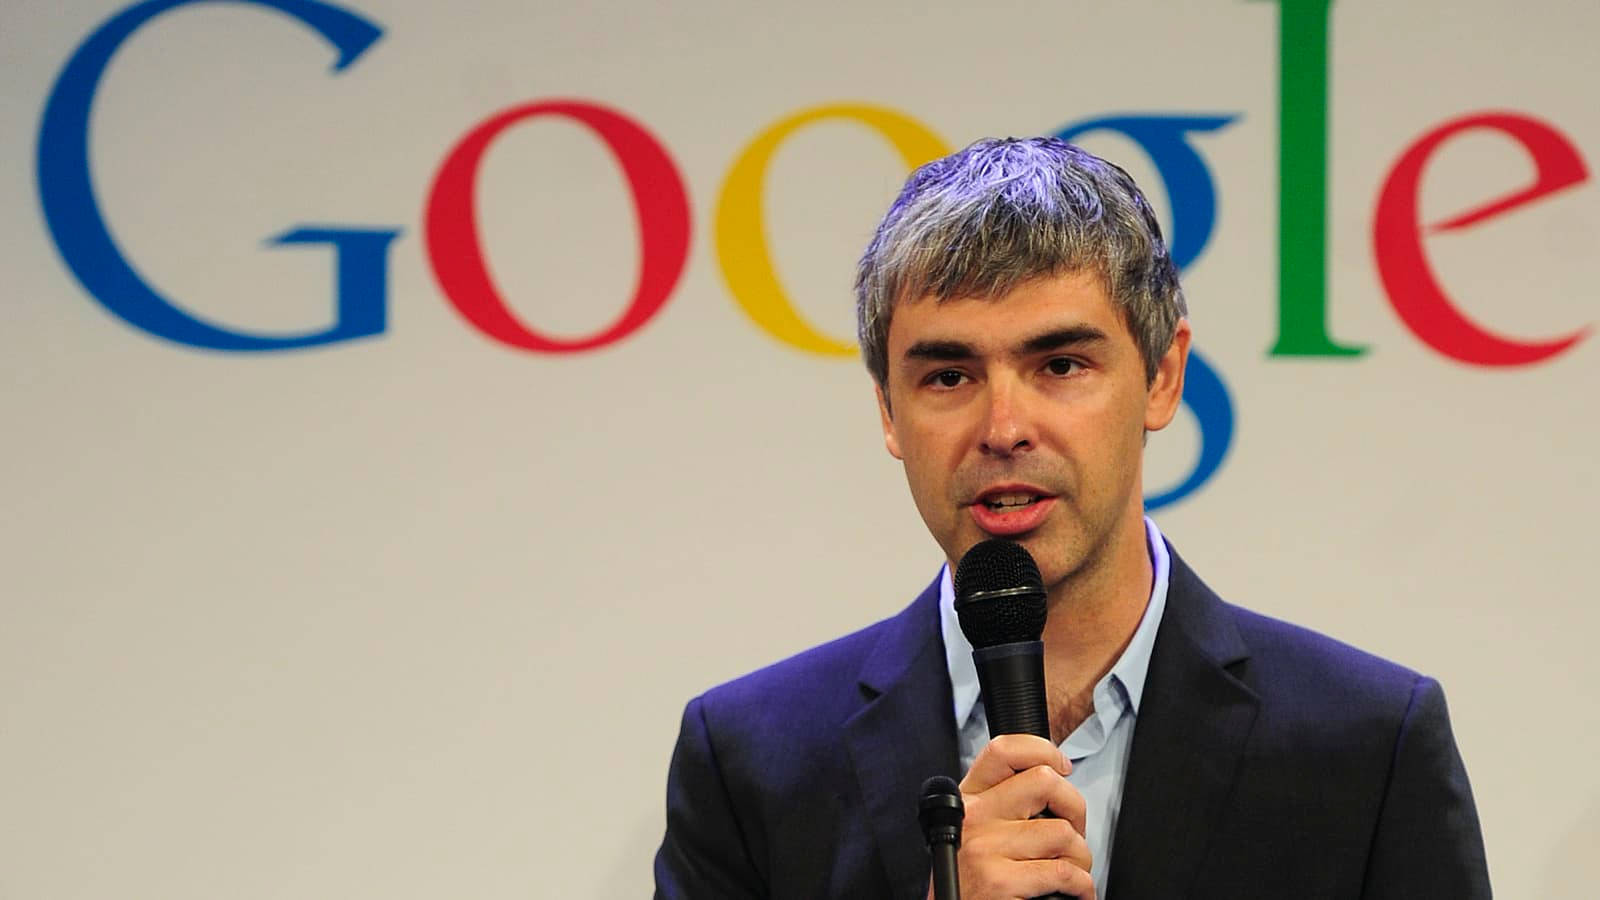 Larry Page Us Billionaire Co Founder Speech Photo Wallpaper